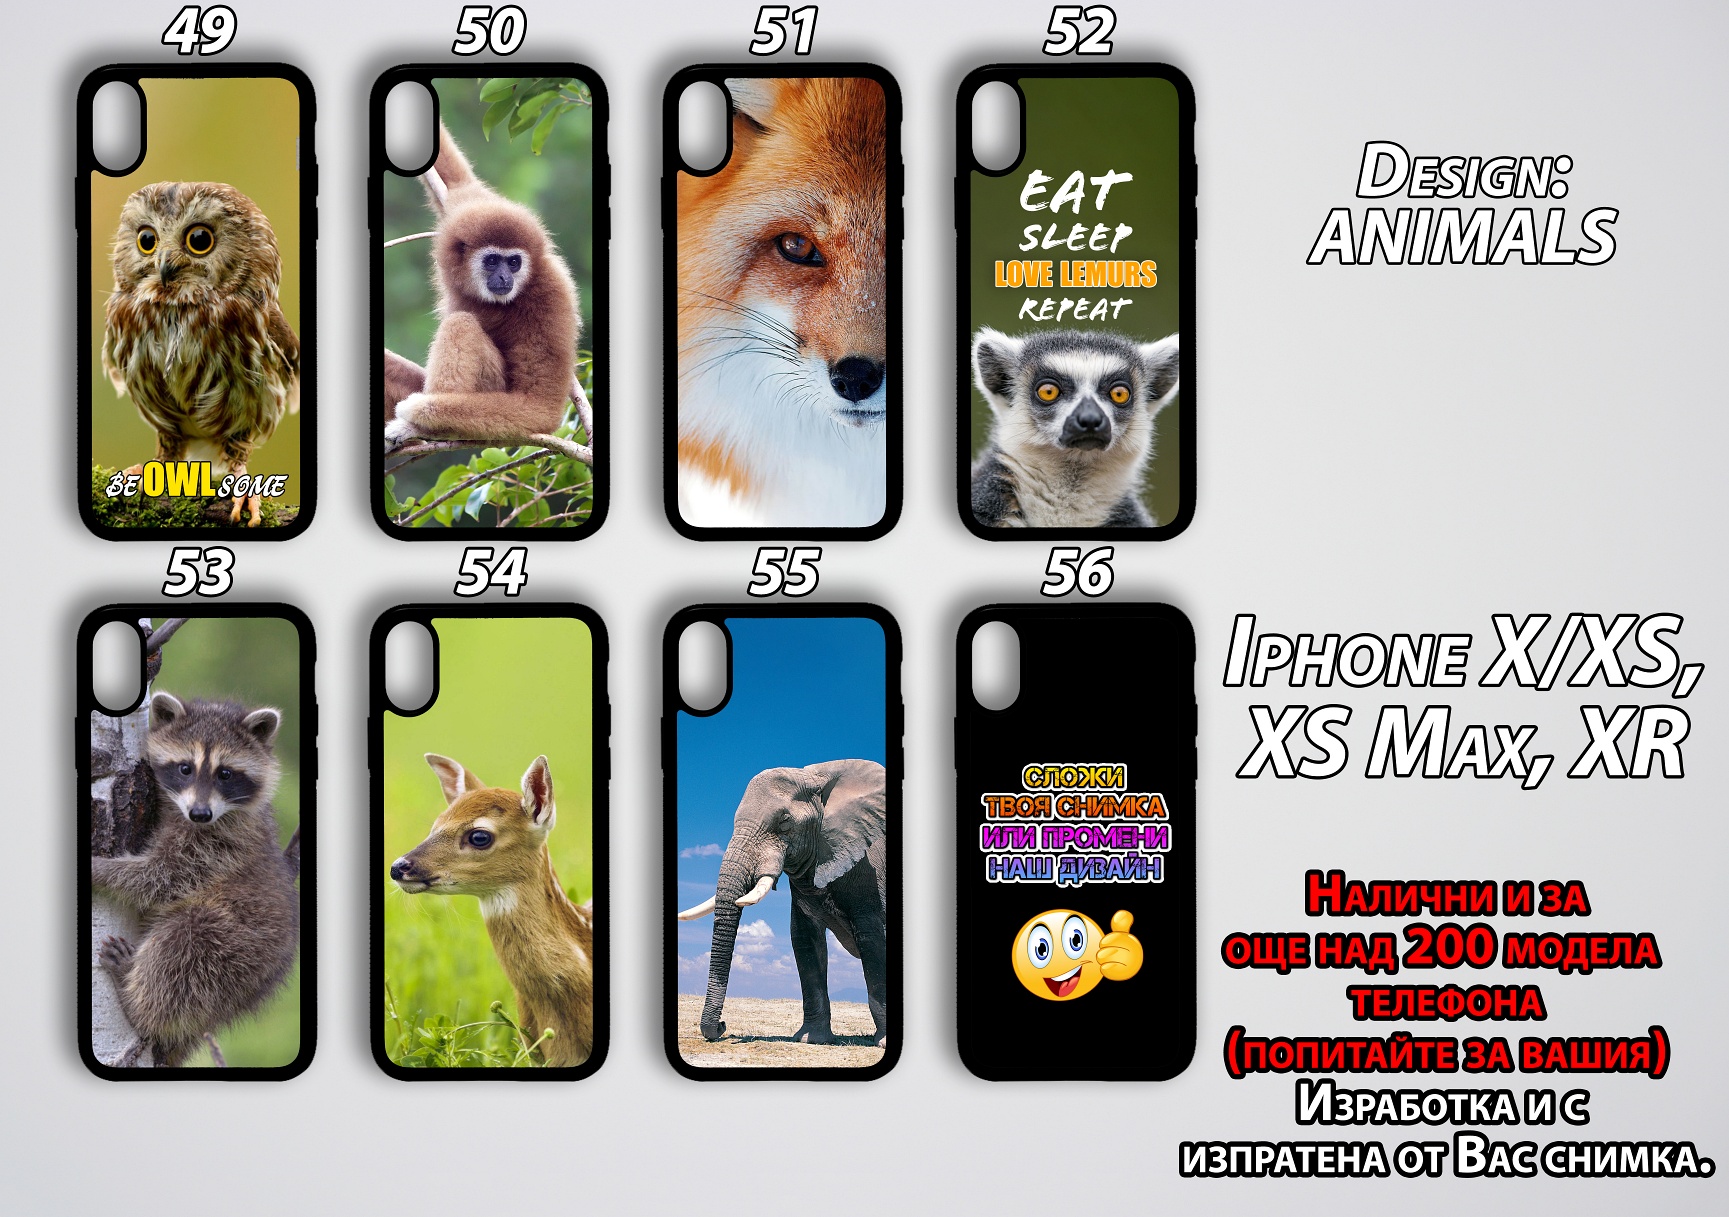 mobile phone cases NEW-Animals 49